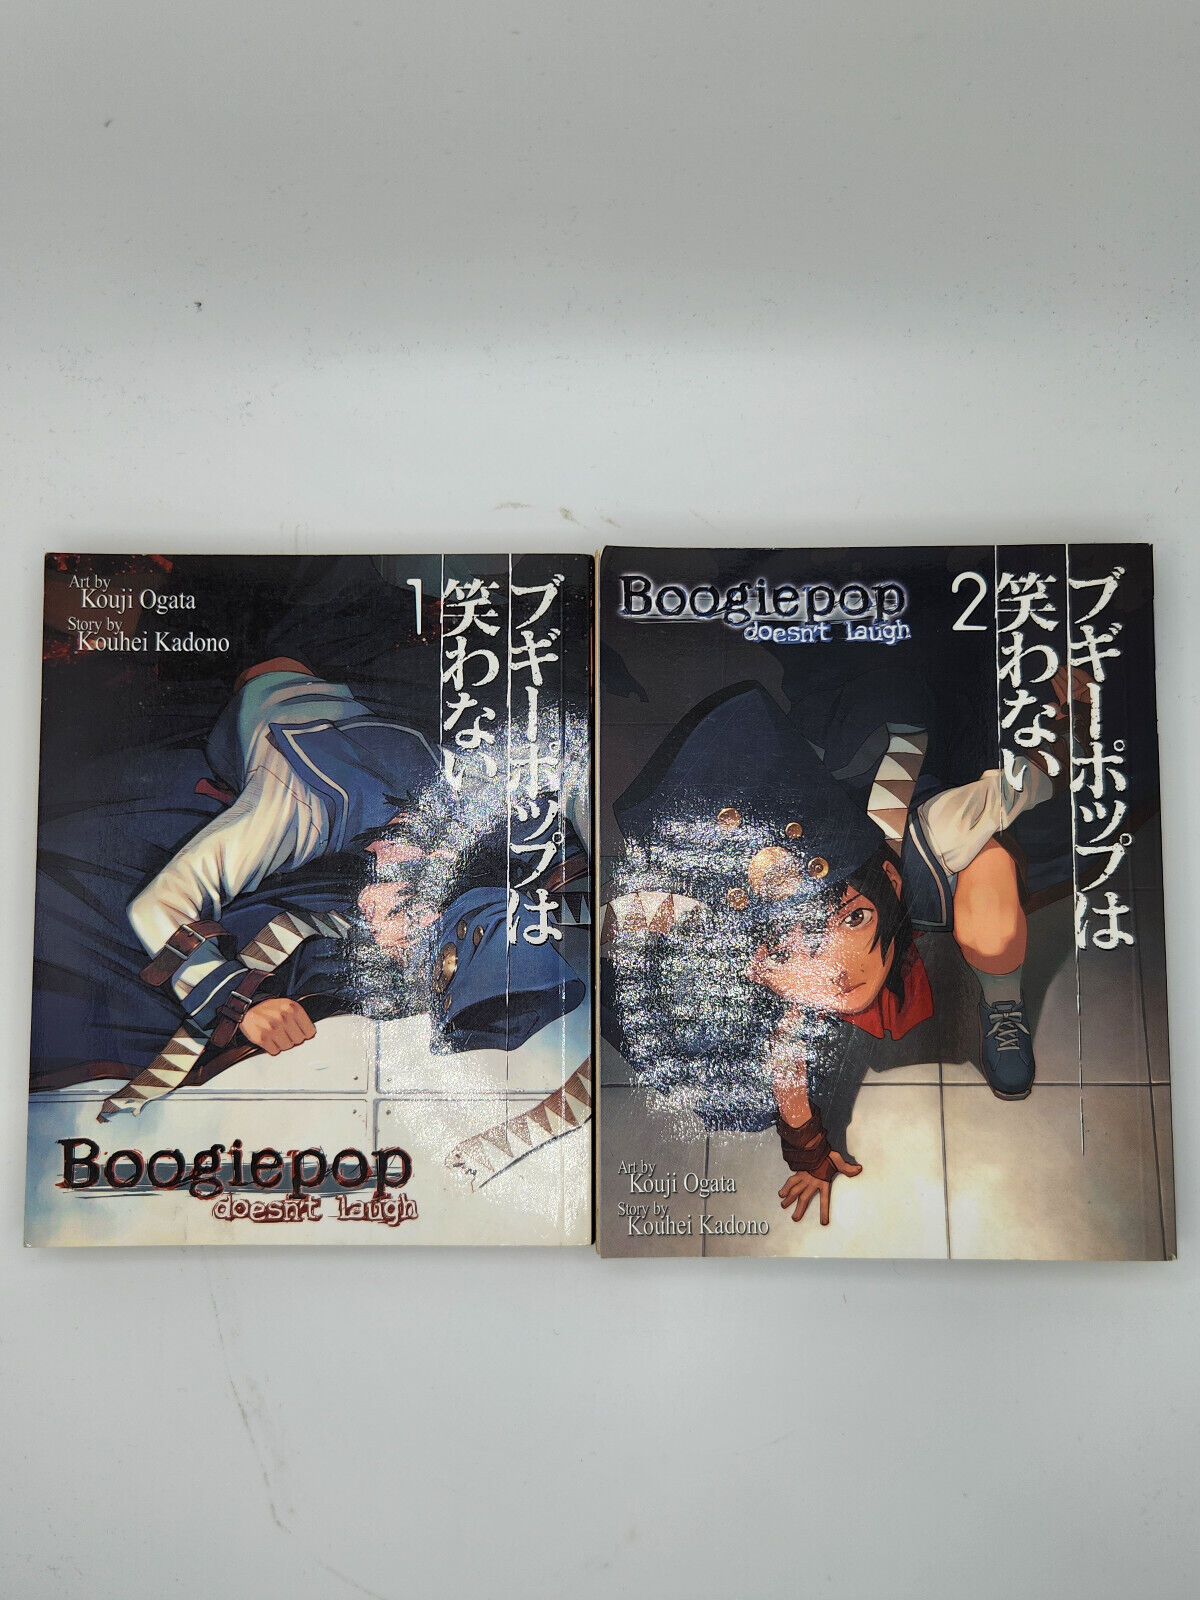 Manga Book Lot Mature 16+ BOOGIEPOP DOESN'T LAUGH Volumes 1 & 2 Kouhei Kadono